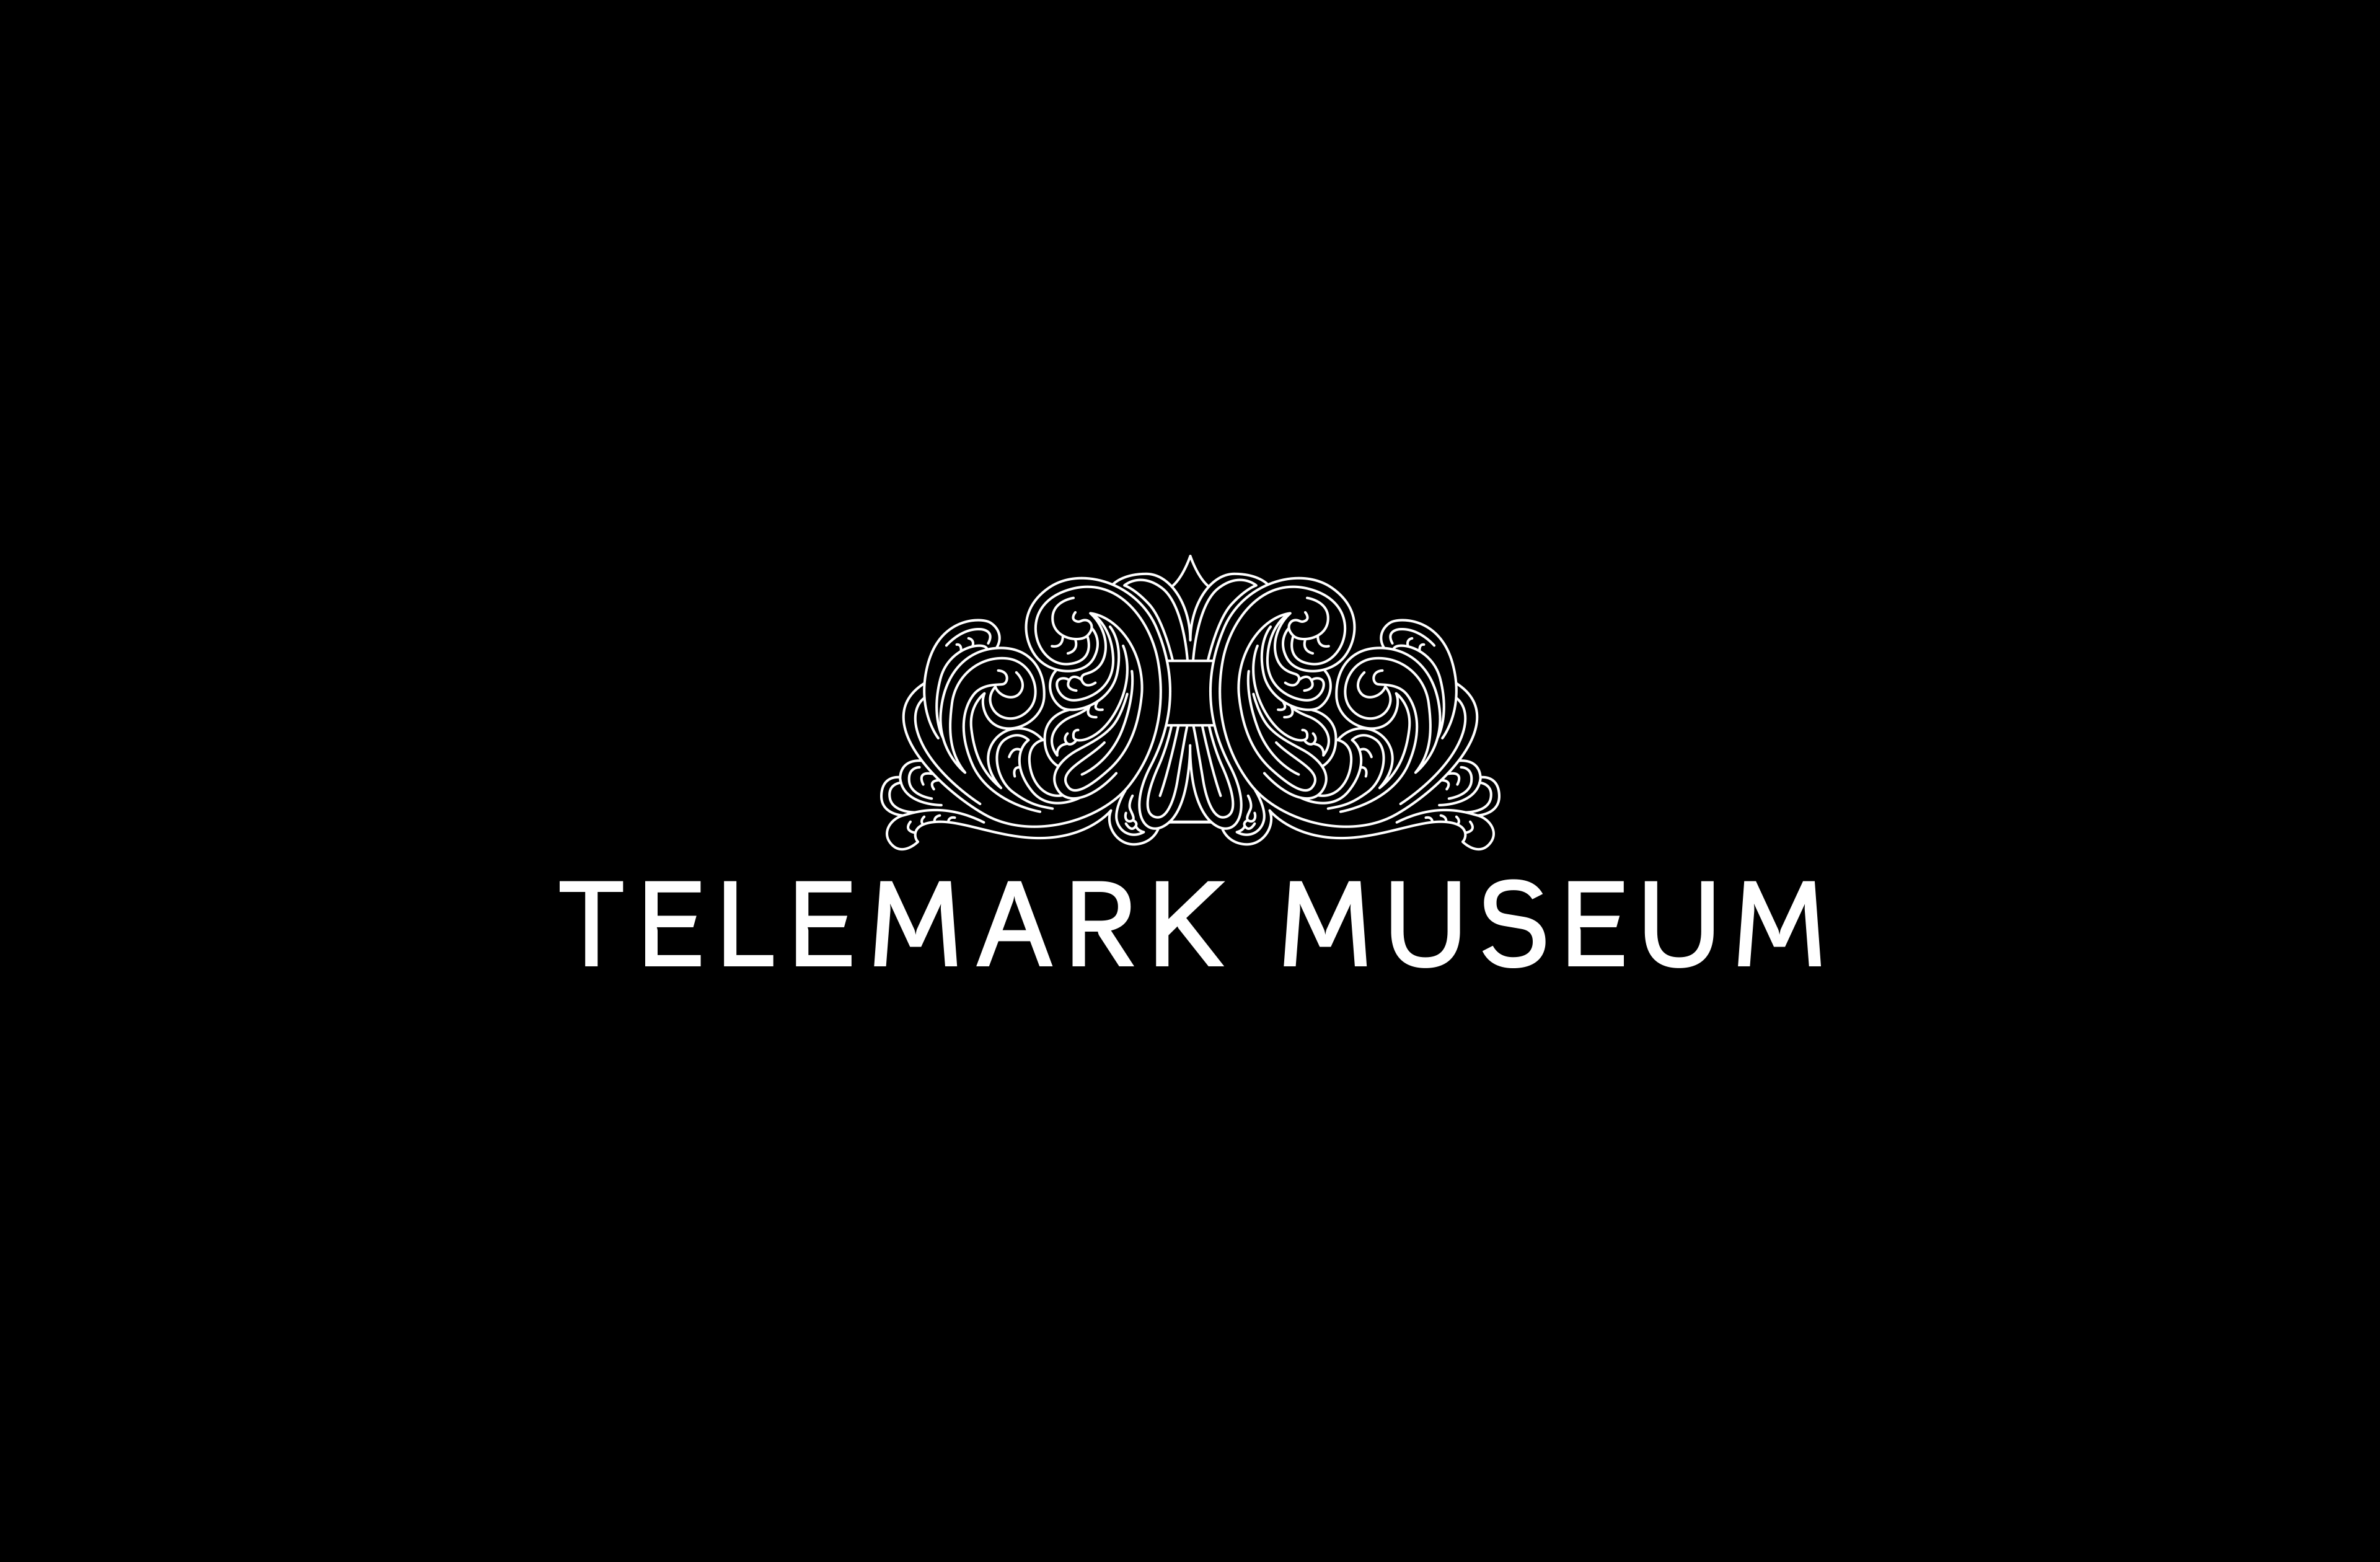 Telemark museum - logo